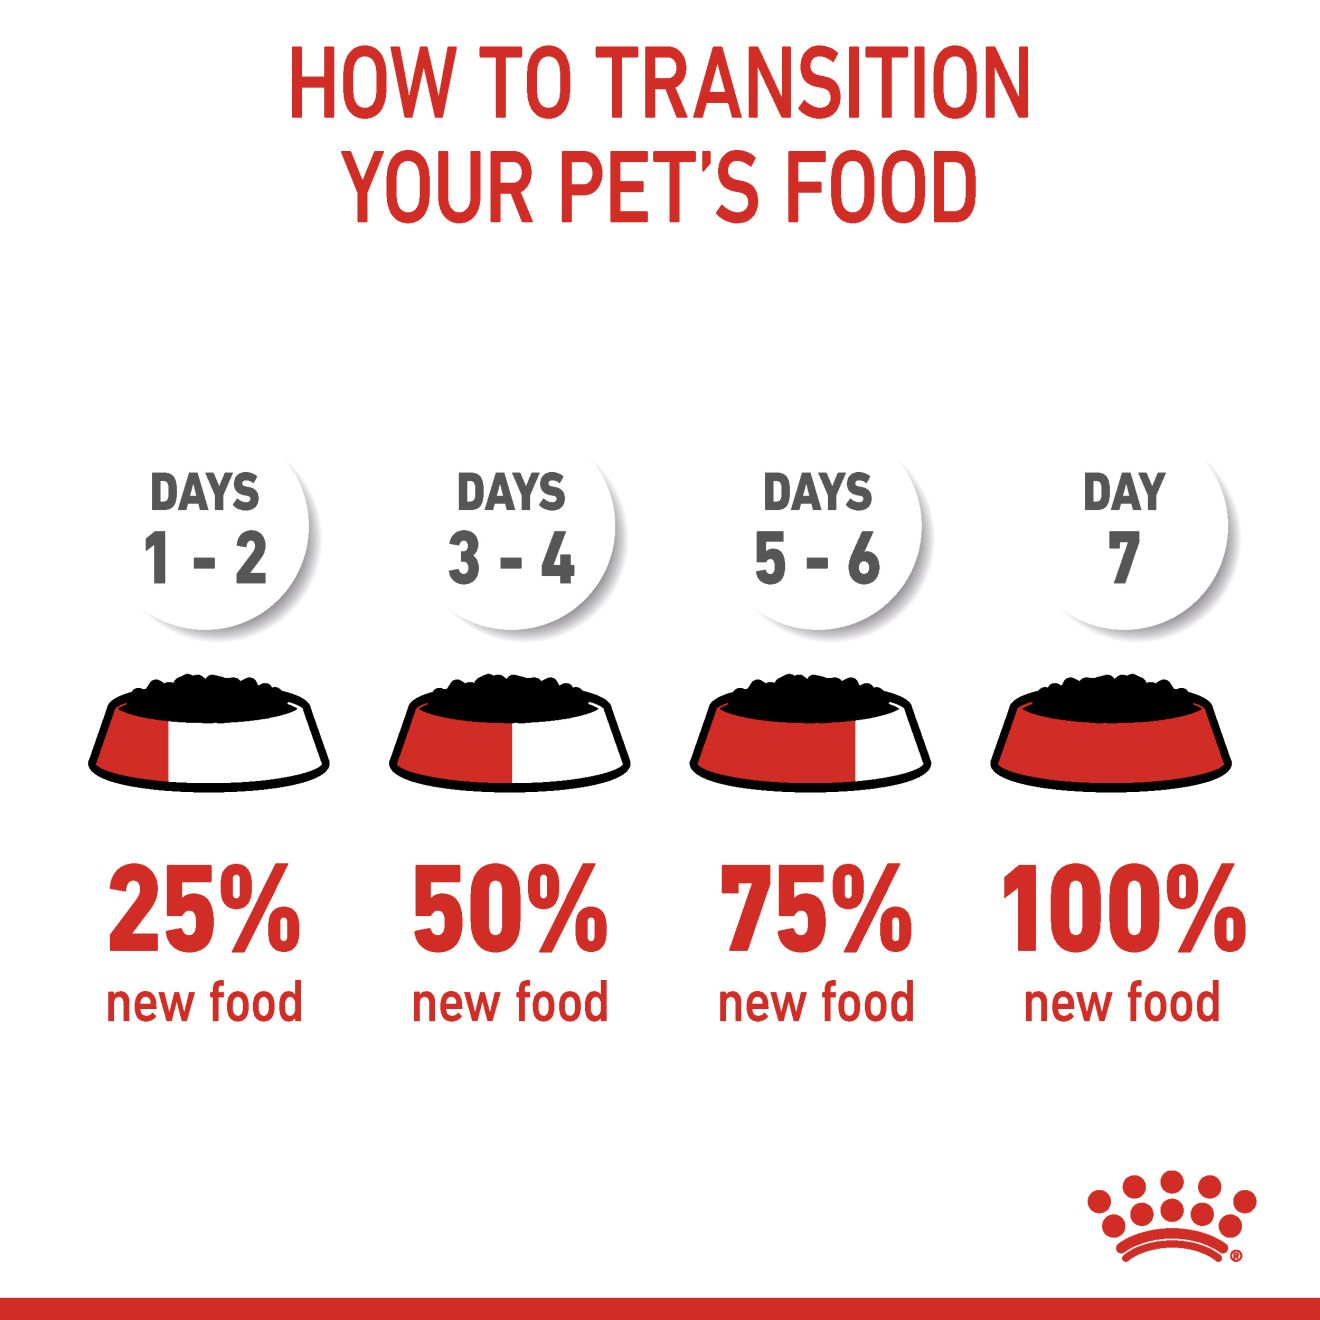 ROYAL CANIN อาหารแมวโต ที่ต้องการดูแลสุขภาพทางเดินปัสสาวะ ชนิดเปียก (URINARY CARE GRAVY)